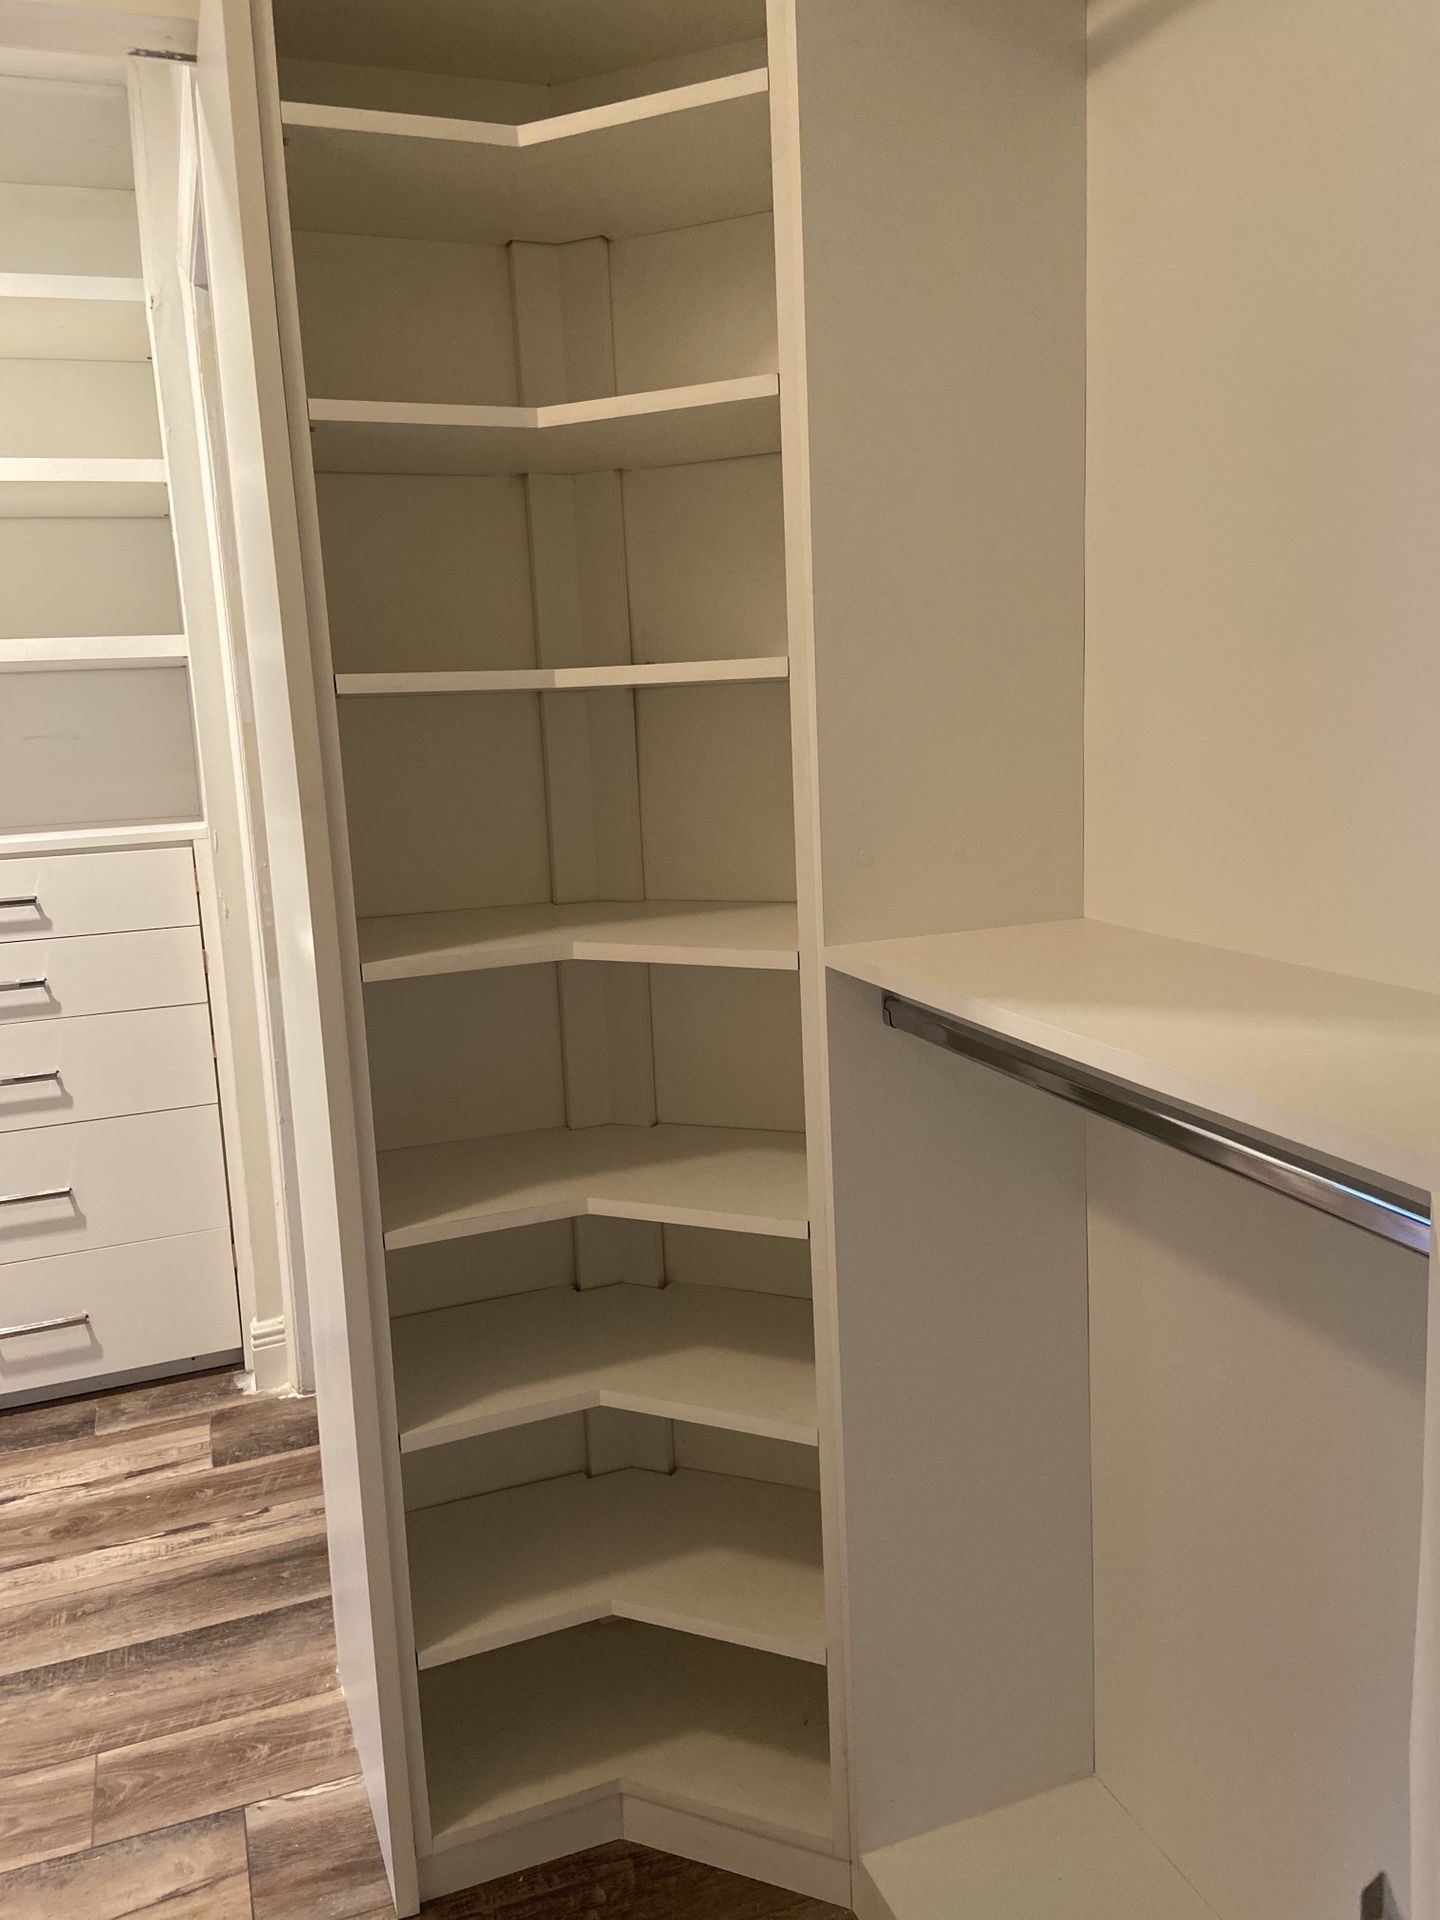 Curved closet and chest of drawers with shelves./ Armario curvo y cómoda con estantes.